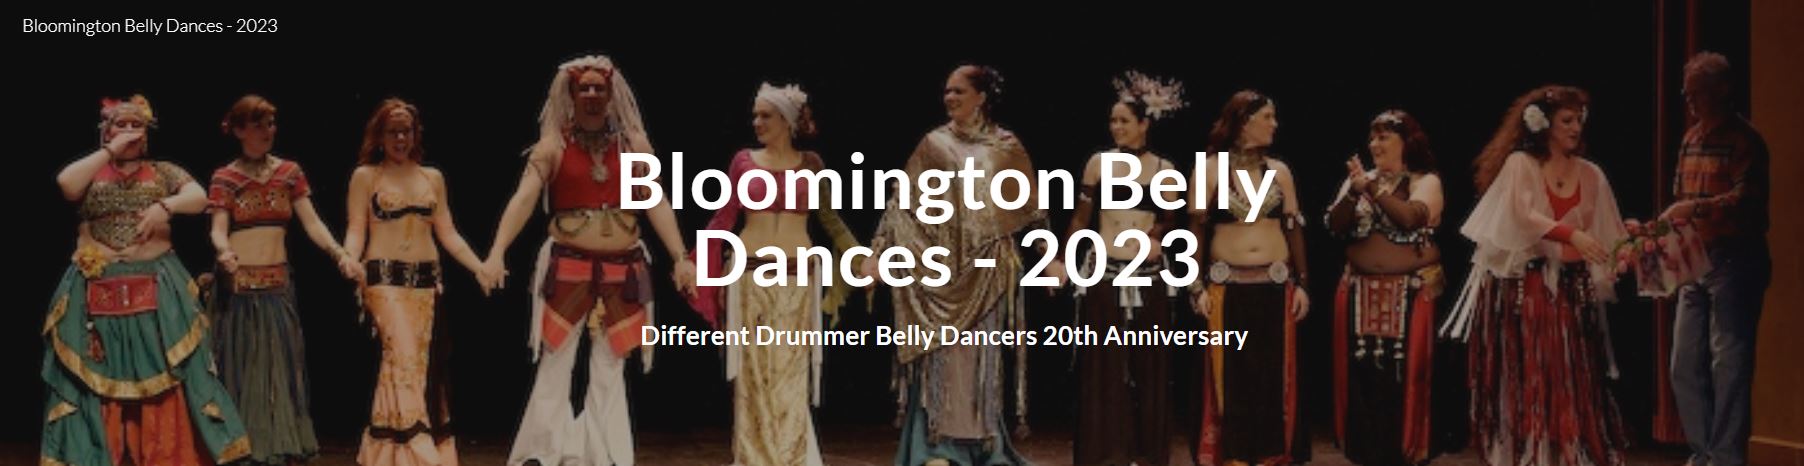 Bloomington Belly Dances - 2023 logo pic